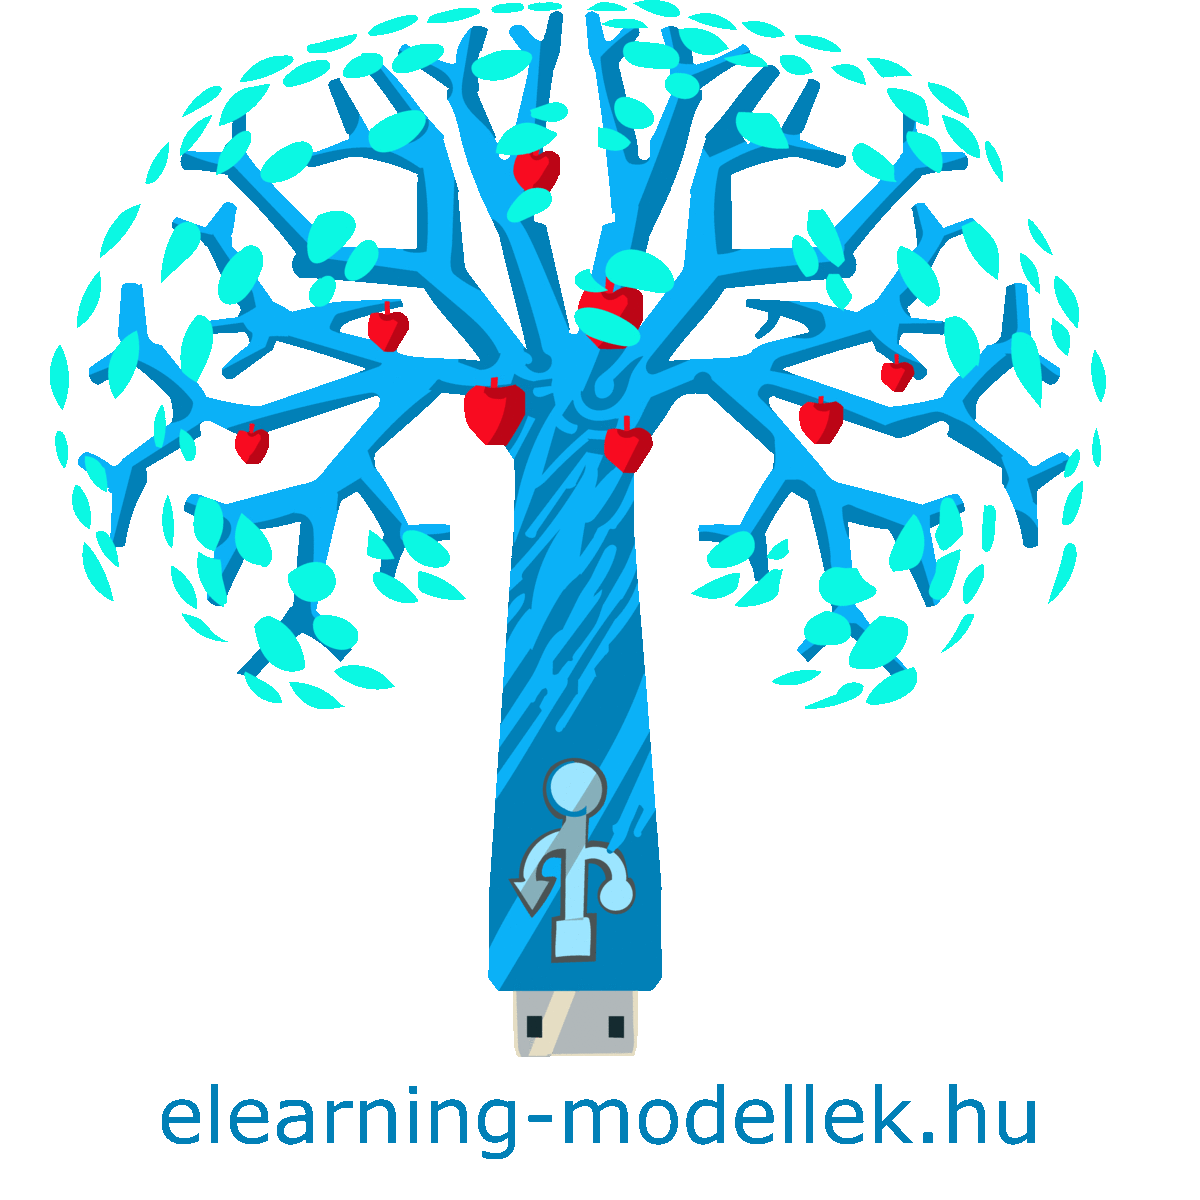 elearning_modellek_hu bemutató